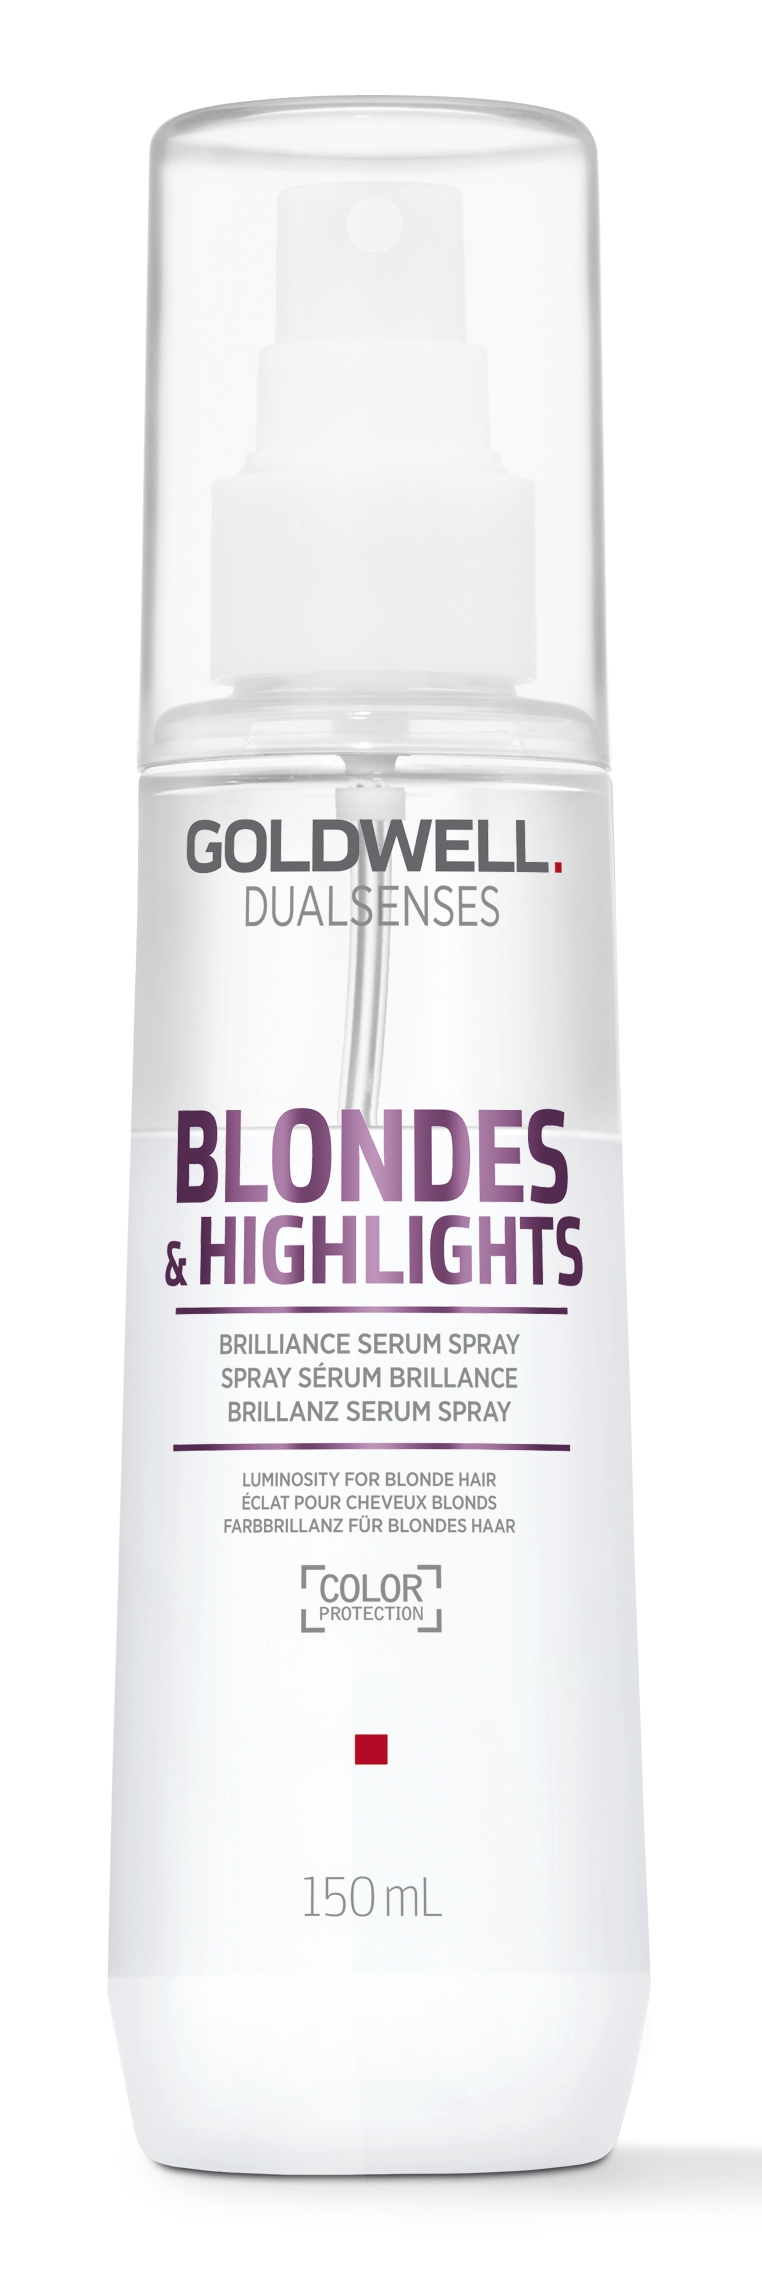 Dual Senses Blond Serum Spray 150ml